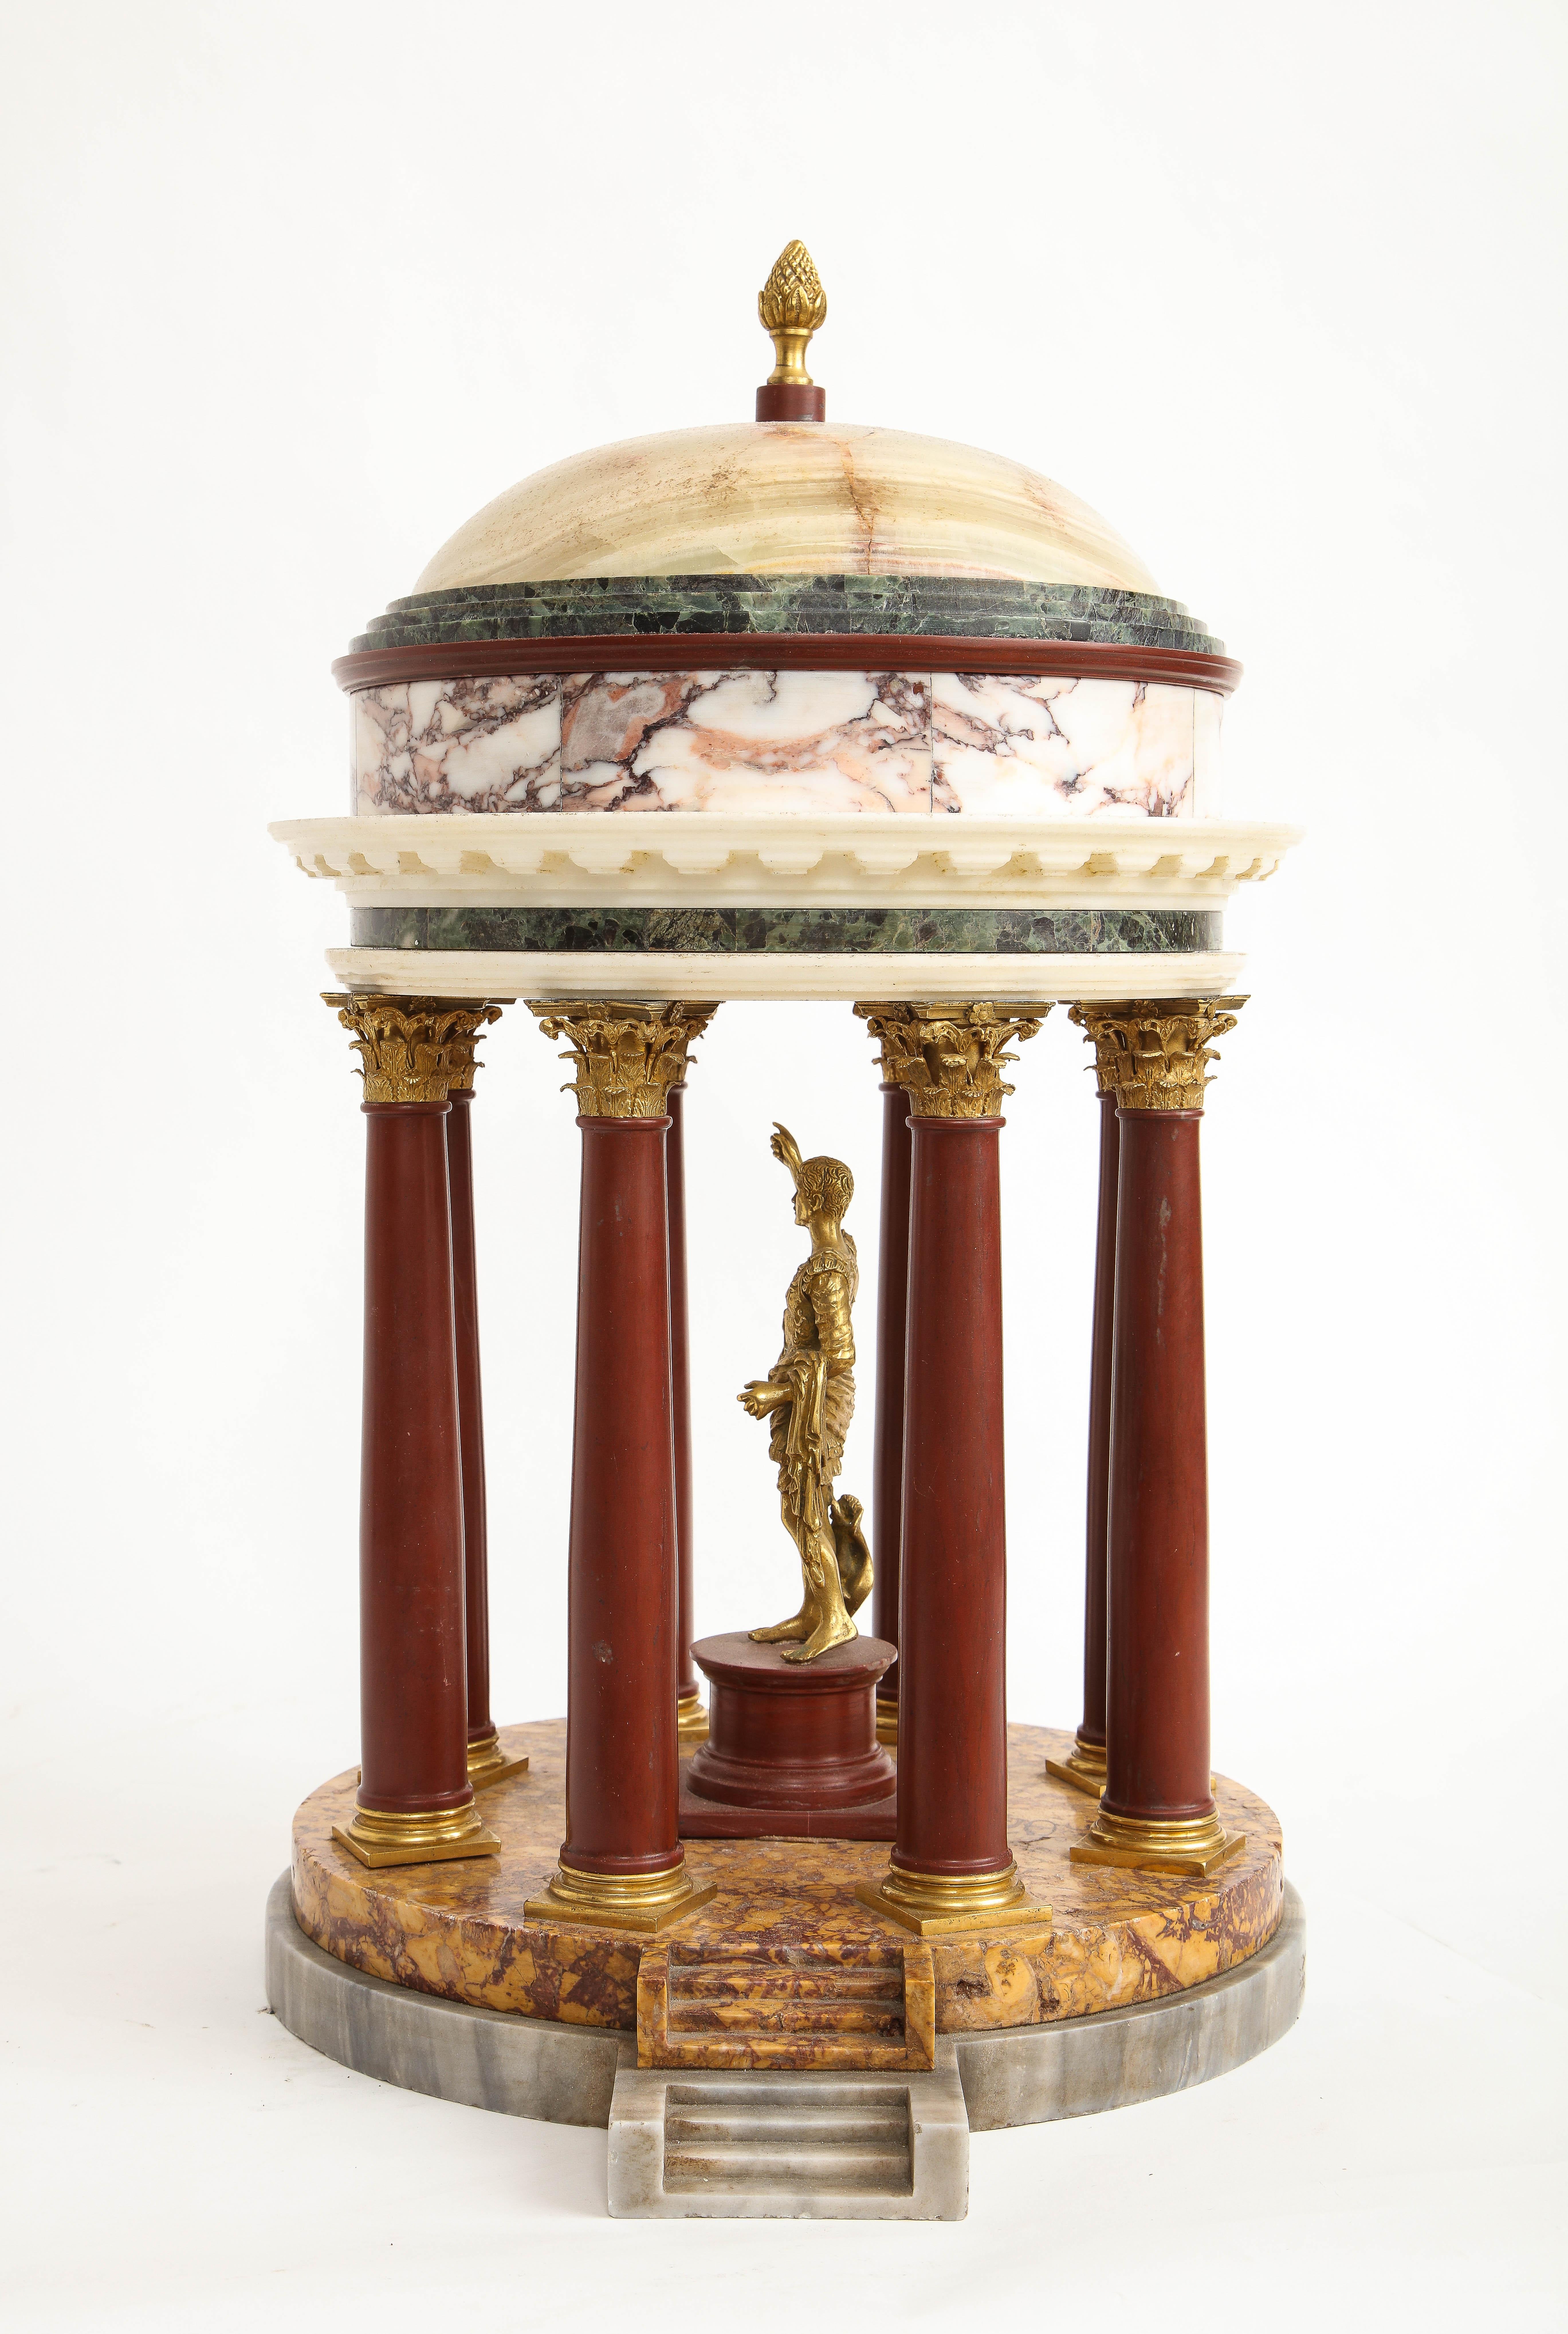 Hand-Carved 19th Century Italian Ormolu Mounted Multi-Marble Julius Caesar Coliseum Model For Sale